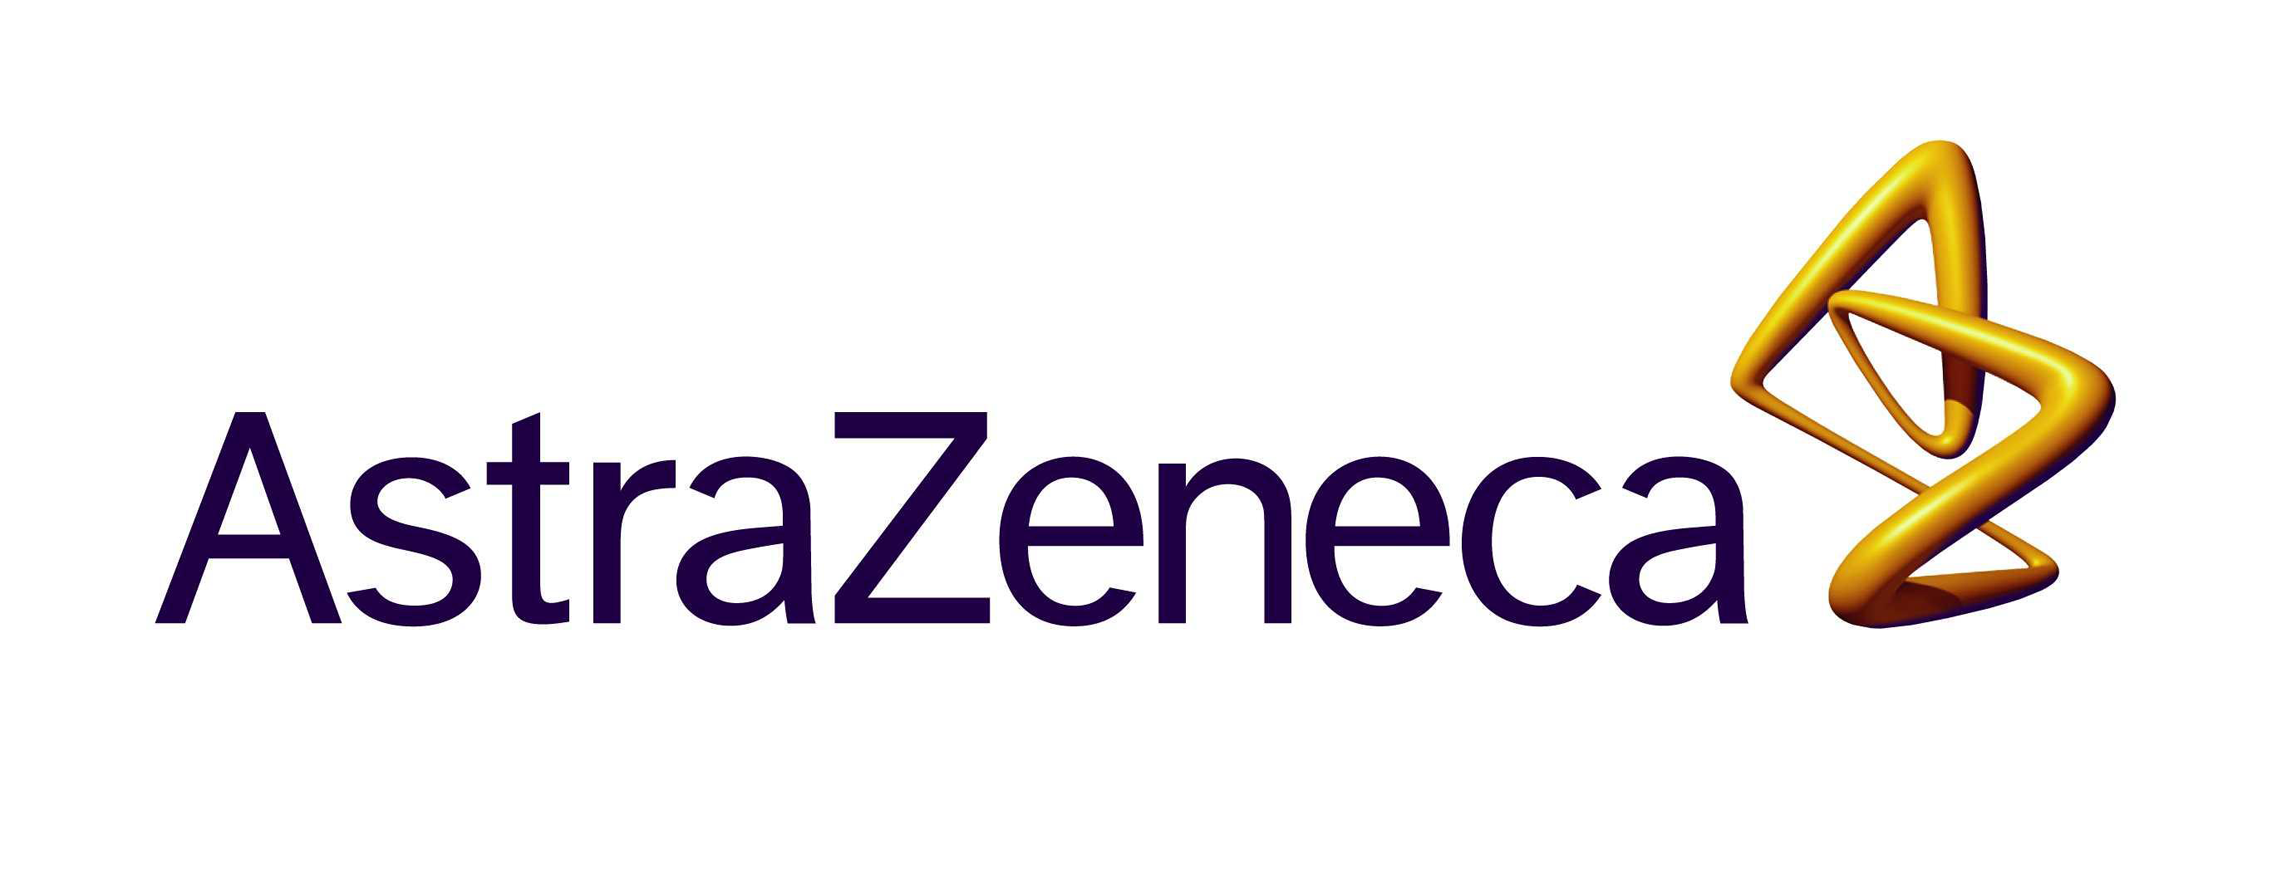 Astrazeneca Logo PNG - 114054